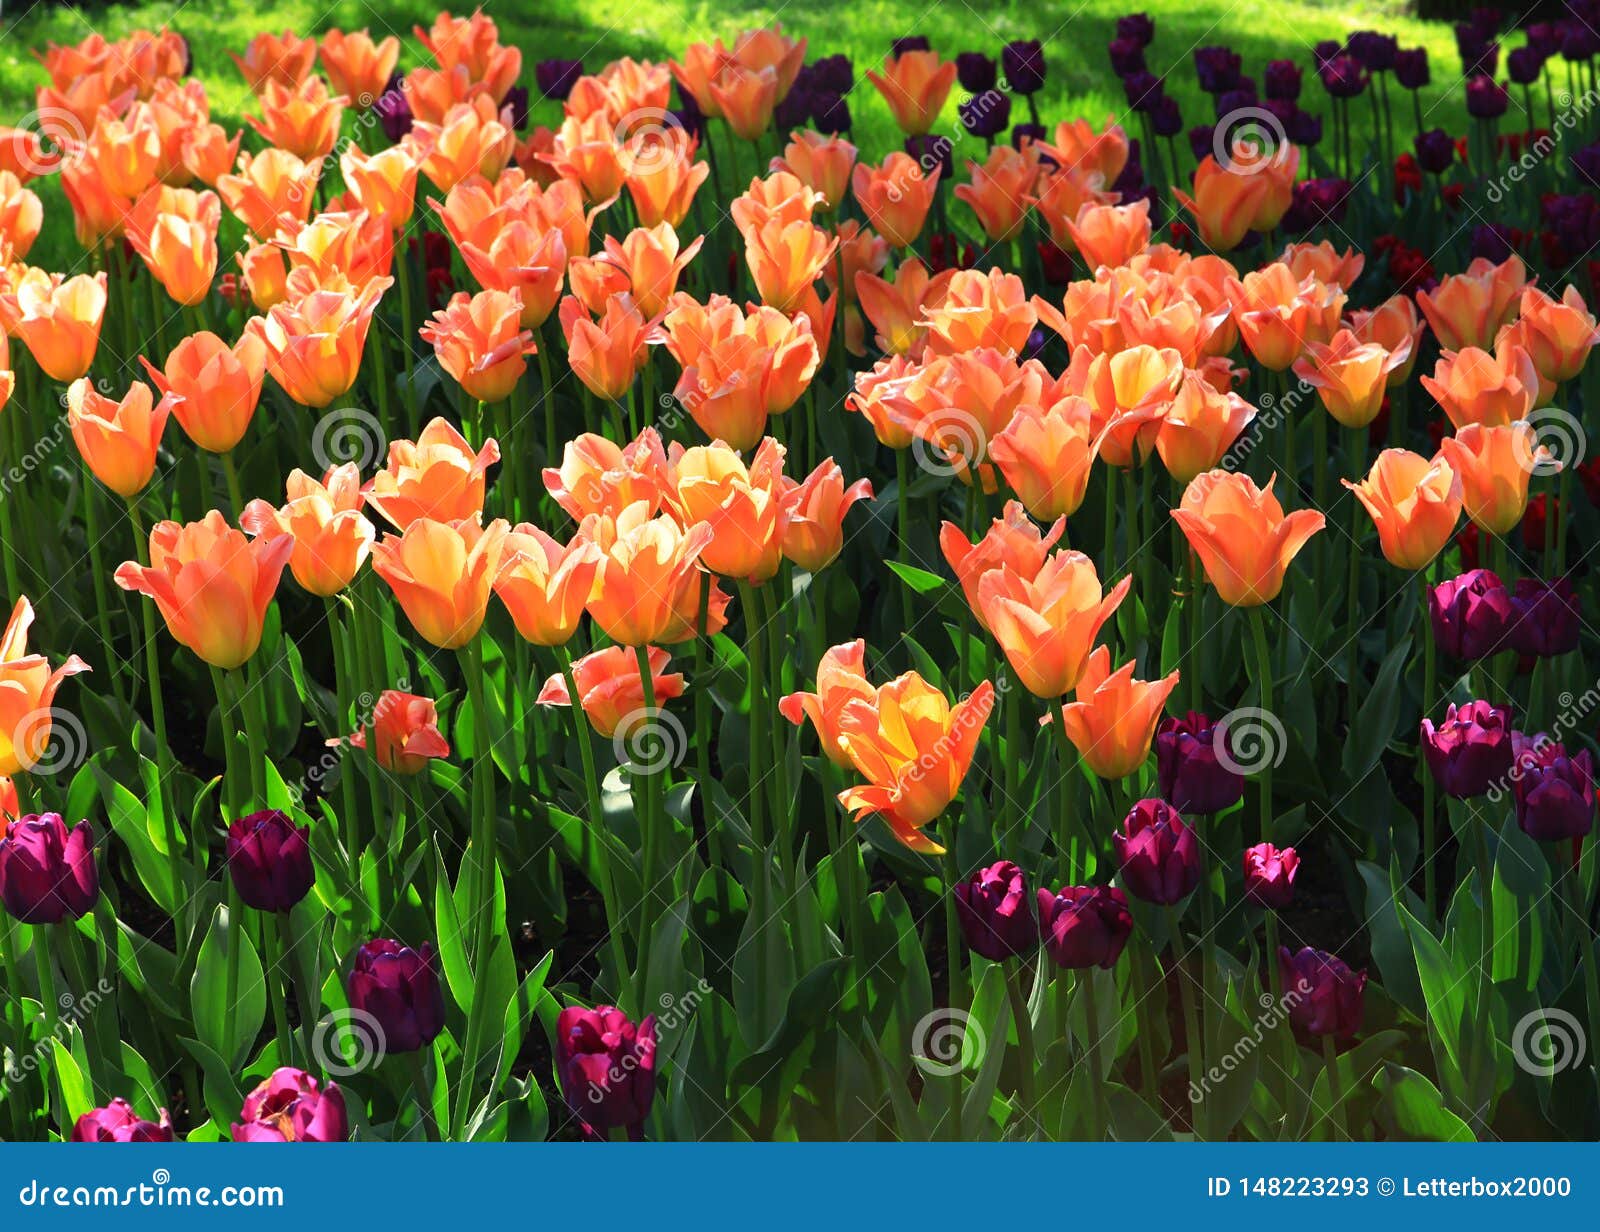 Orange and Purple Tulips. Summer Garden. Stock Image - Image of field ...